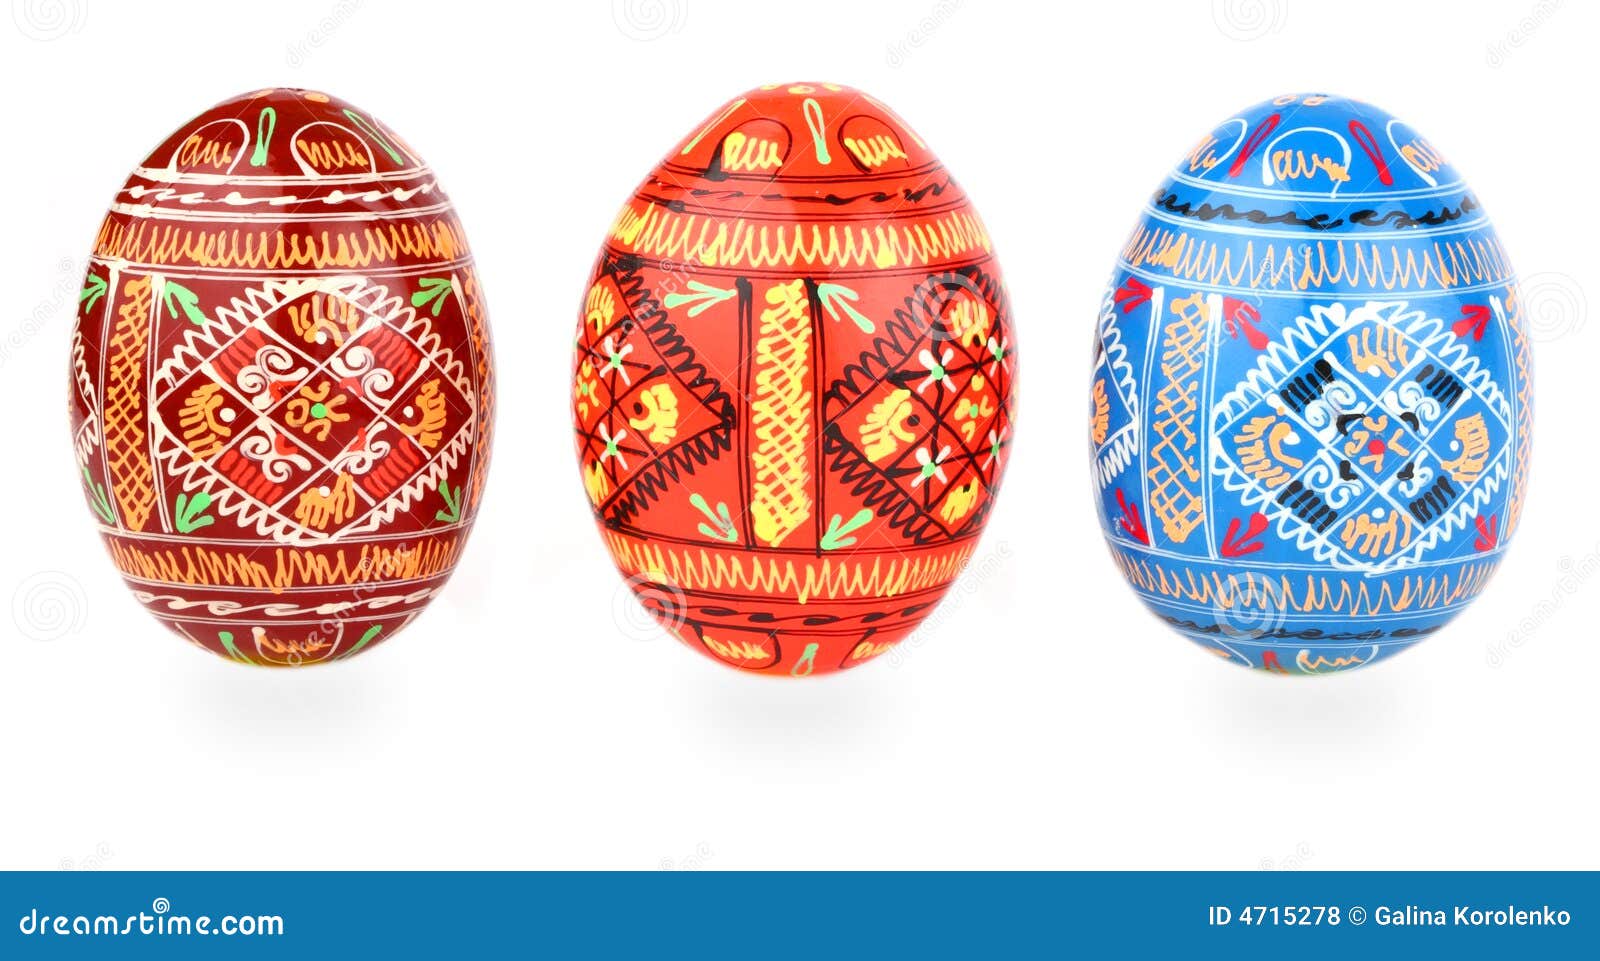 Pysanky: Ukrainian decorated eggs | Latrobe Regional Gallery